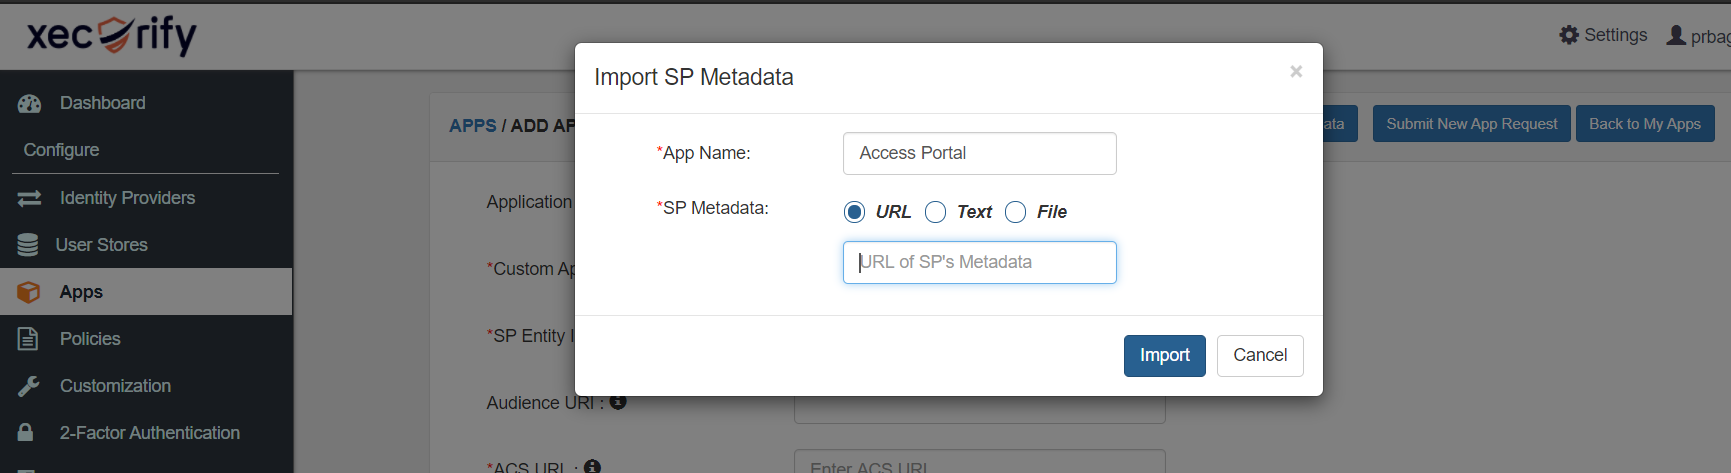 WatchGuard Access Portal 2FA / MFA sp configure